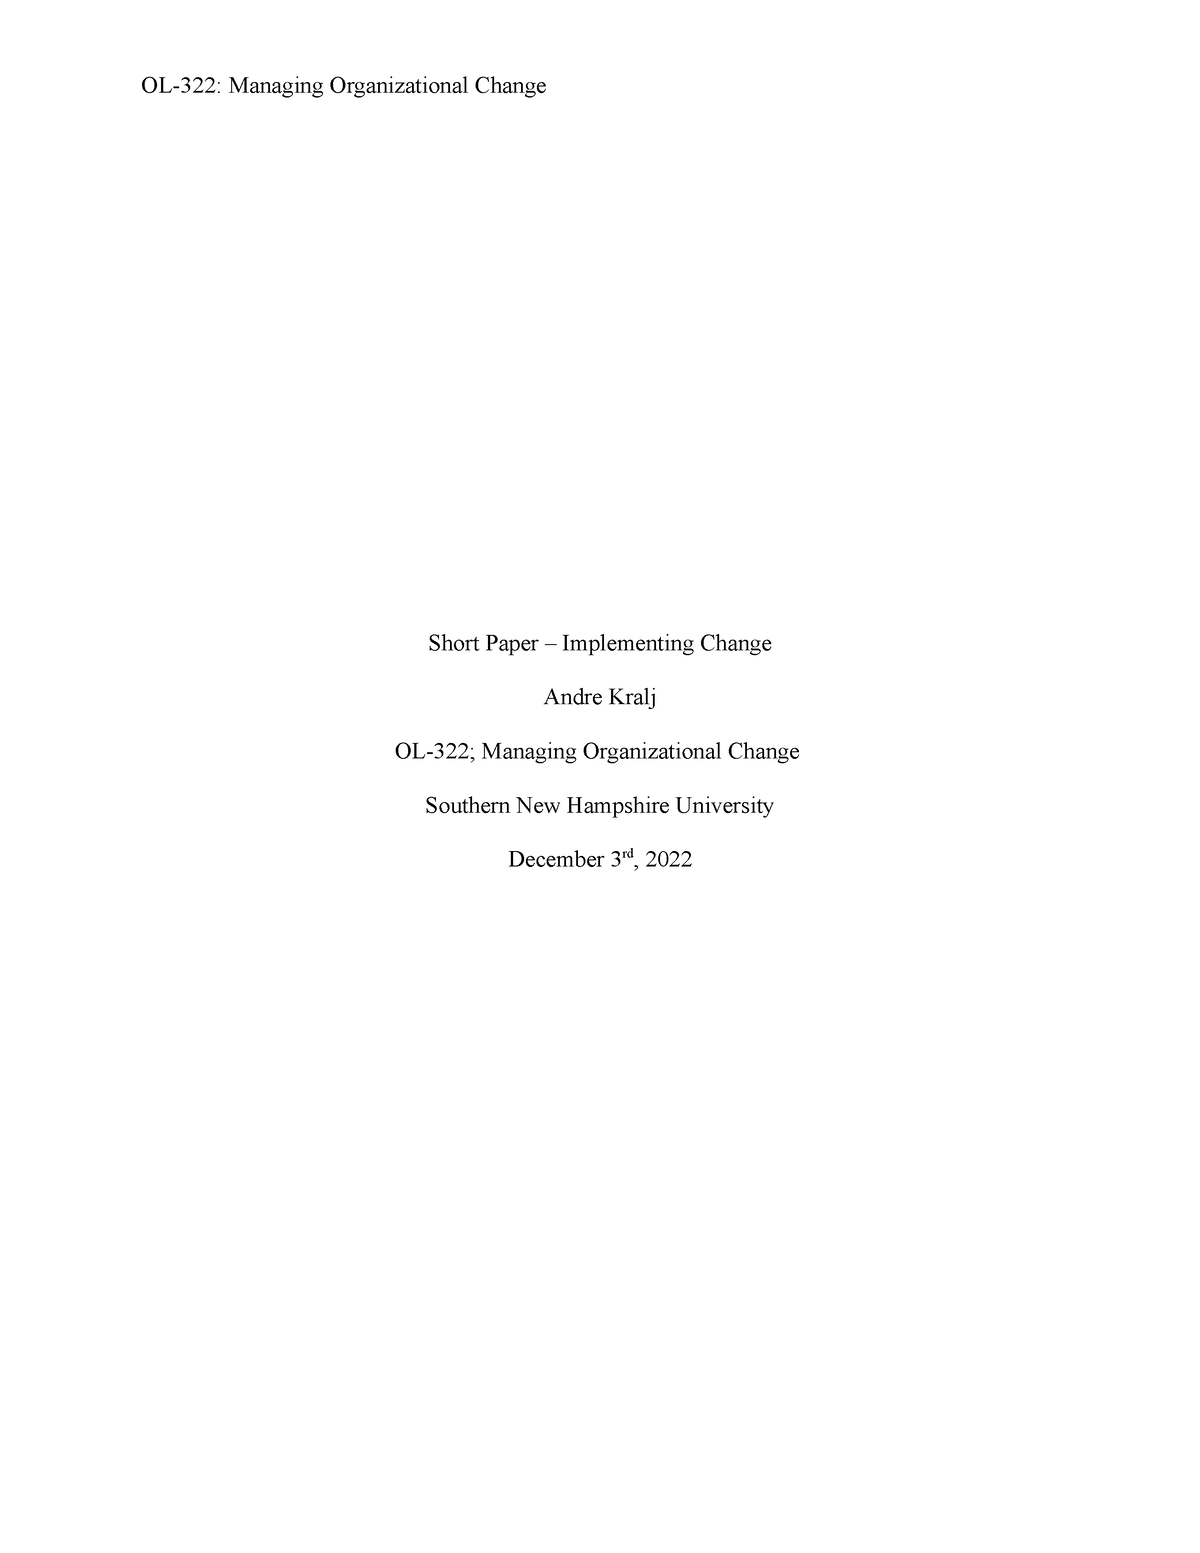 OL-322 6-2 Short Paper Implementing Change - Short Paper – Implementing ...